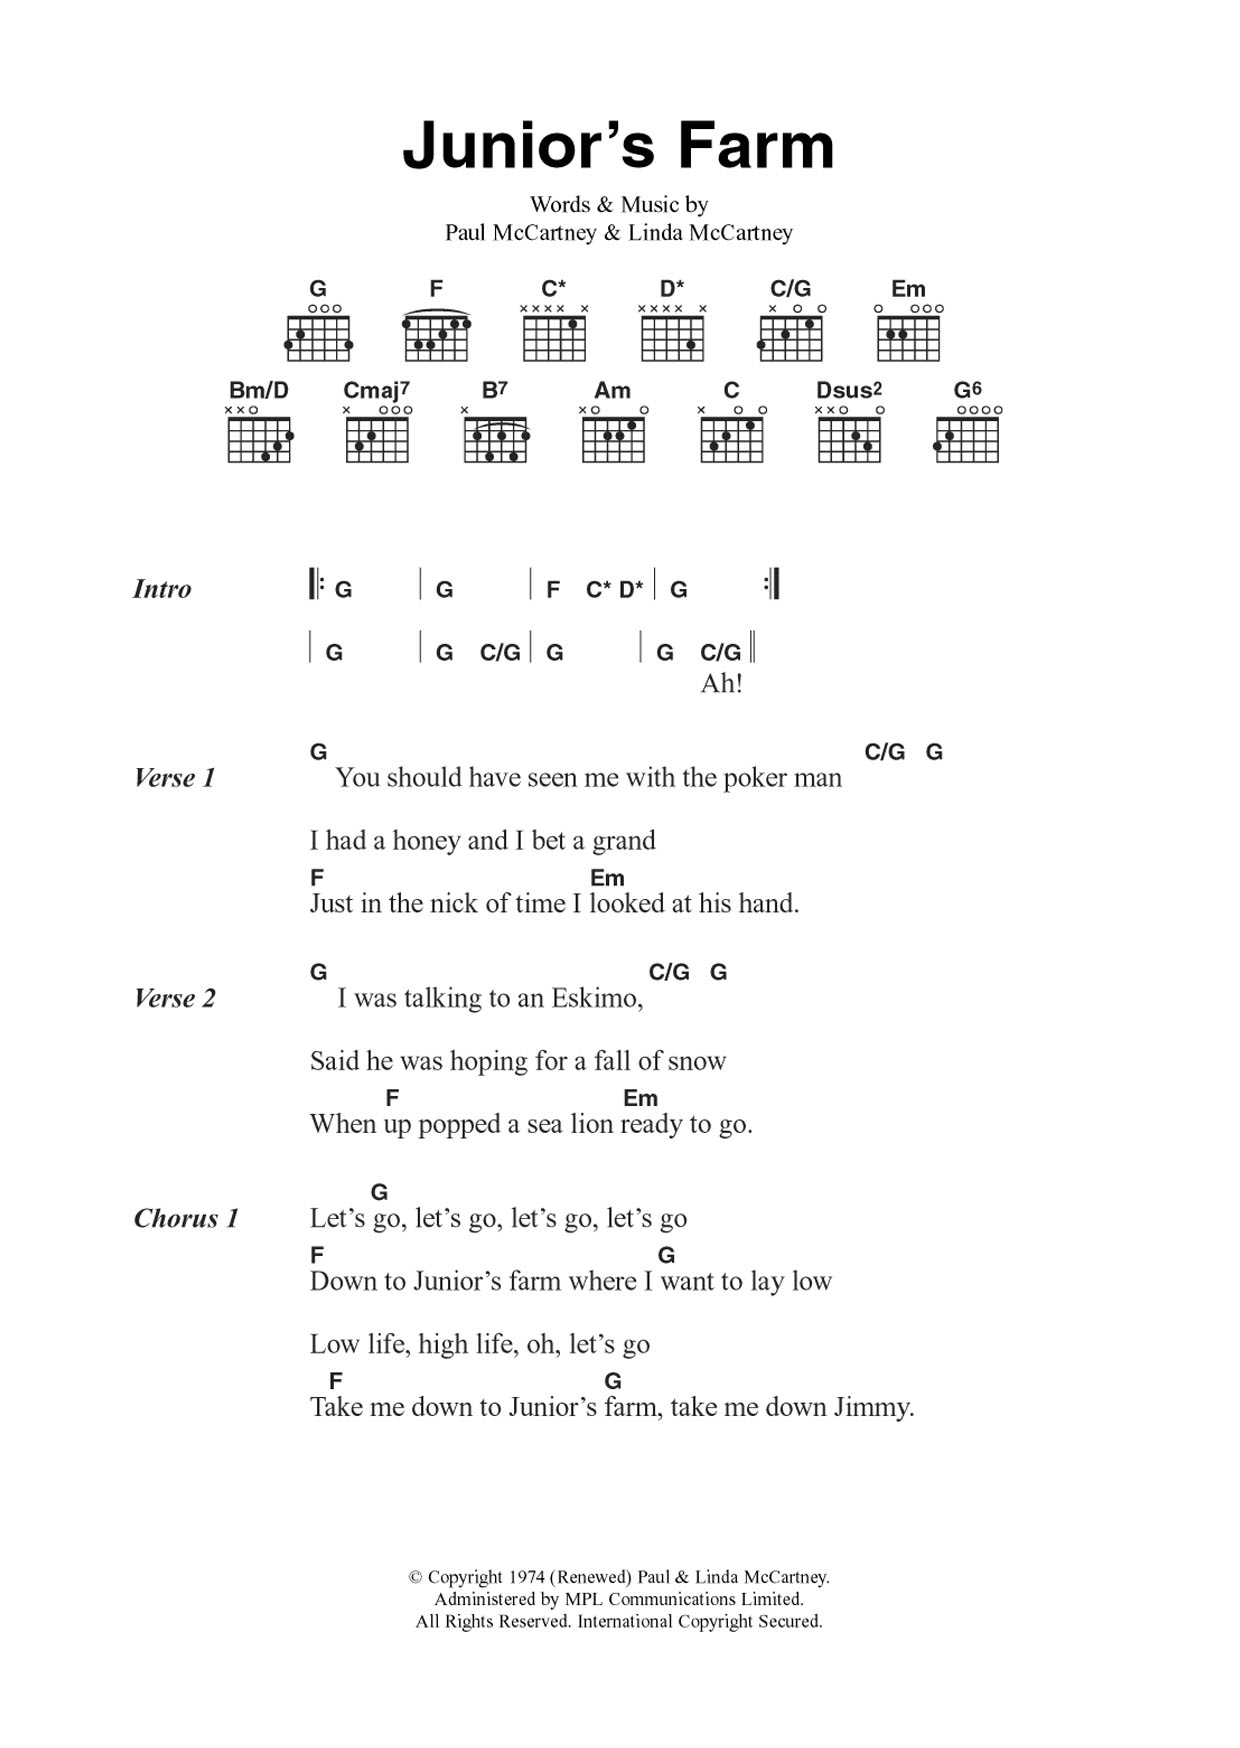 Wings Junior's Farm Sheet Music Notes & Chords for Guitar Chords/Lyrics - Download or Print PDF